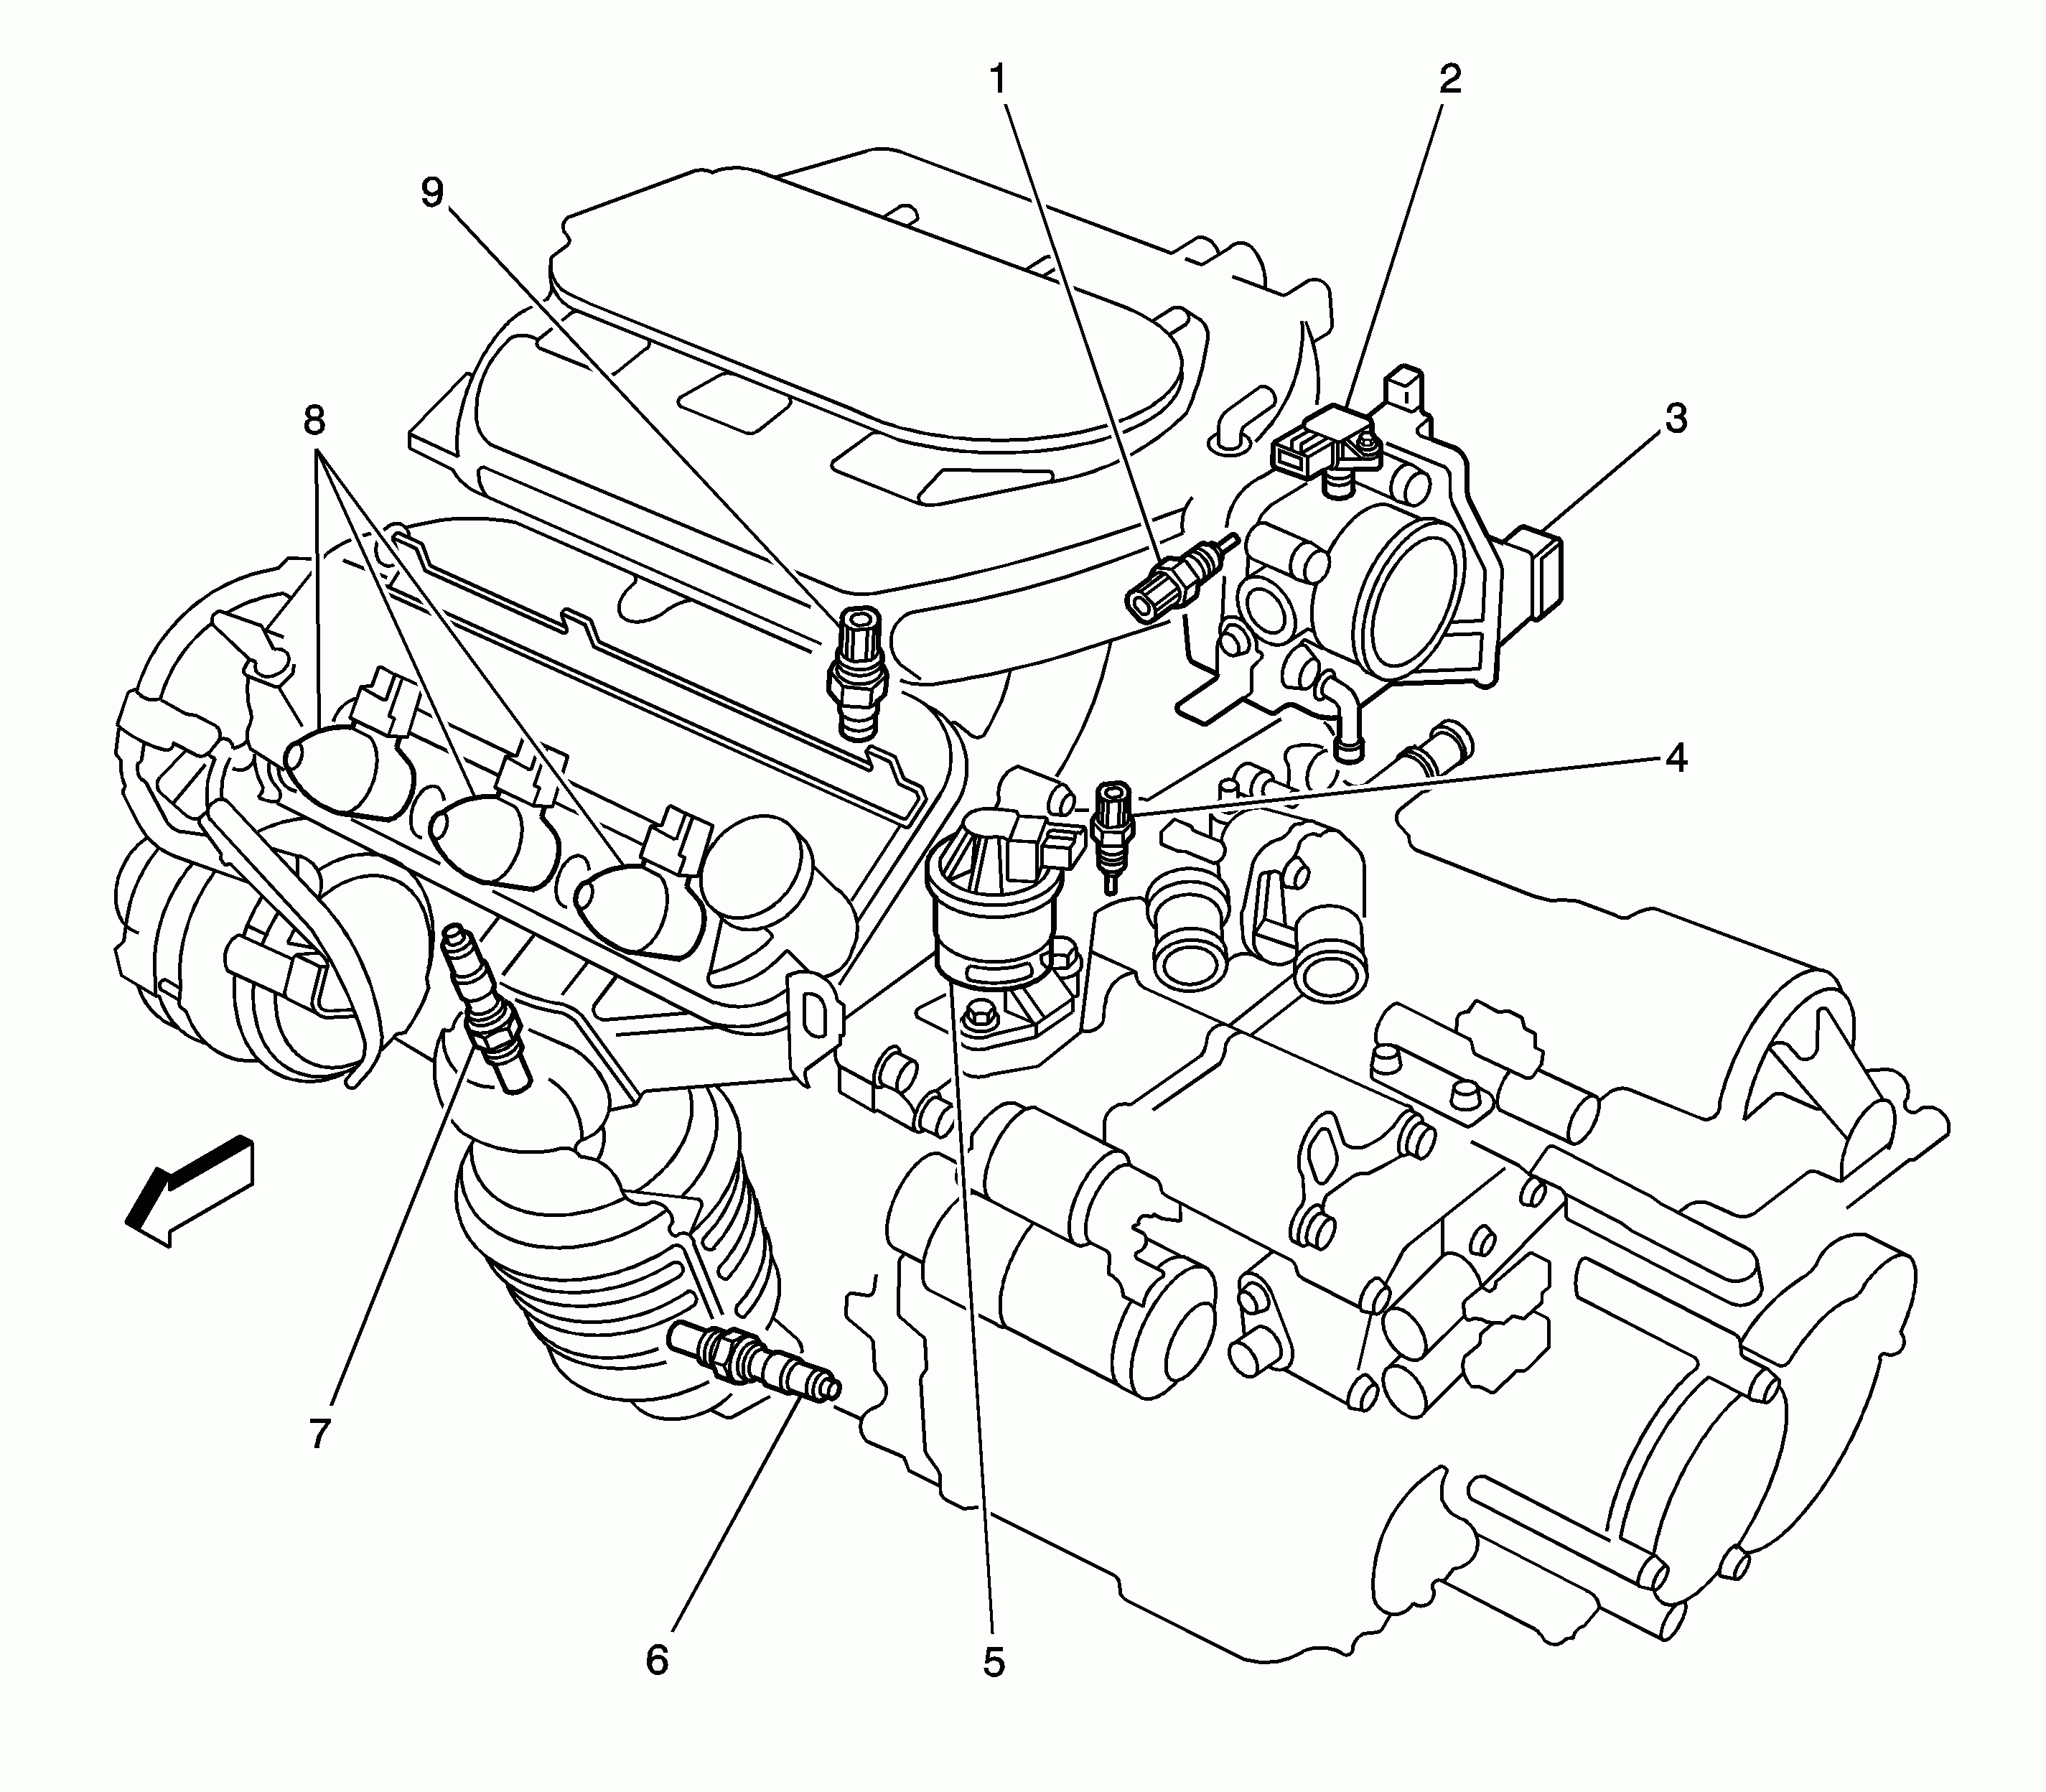 New Holland Skid Steer Parts Diagram 2003 Chevy 2 2l Engine Diagram Wiring Diagram